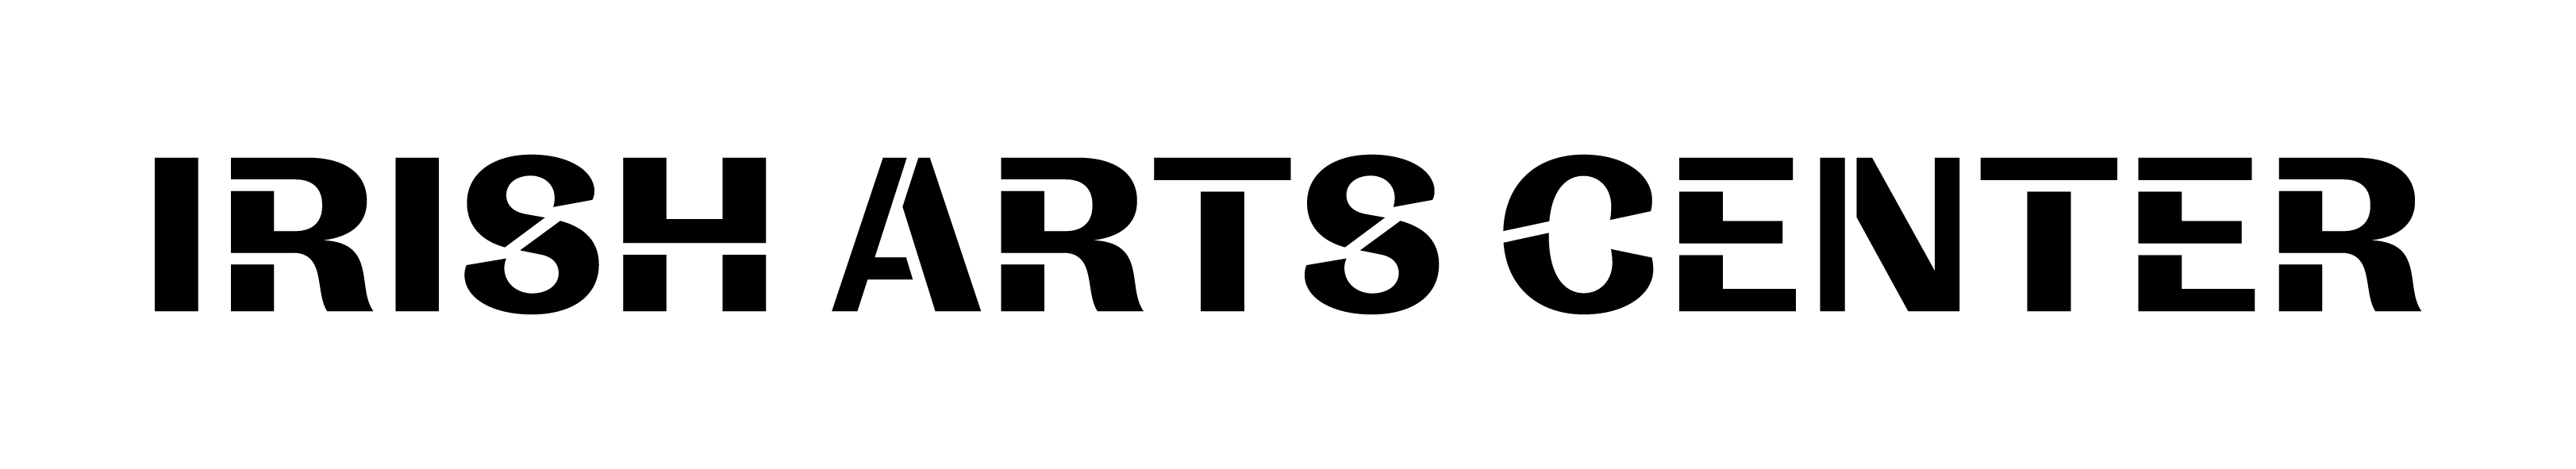 Black stencil-like logo with the text "IRISH ARTS CENTER"